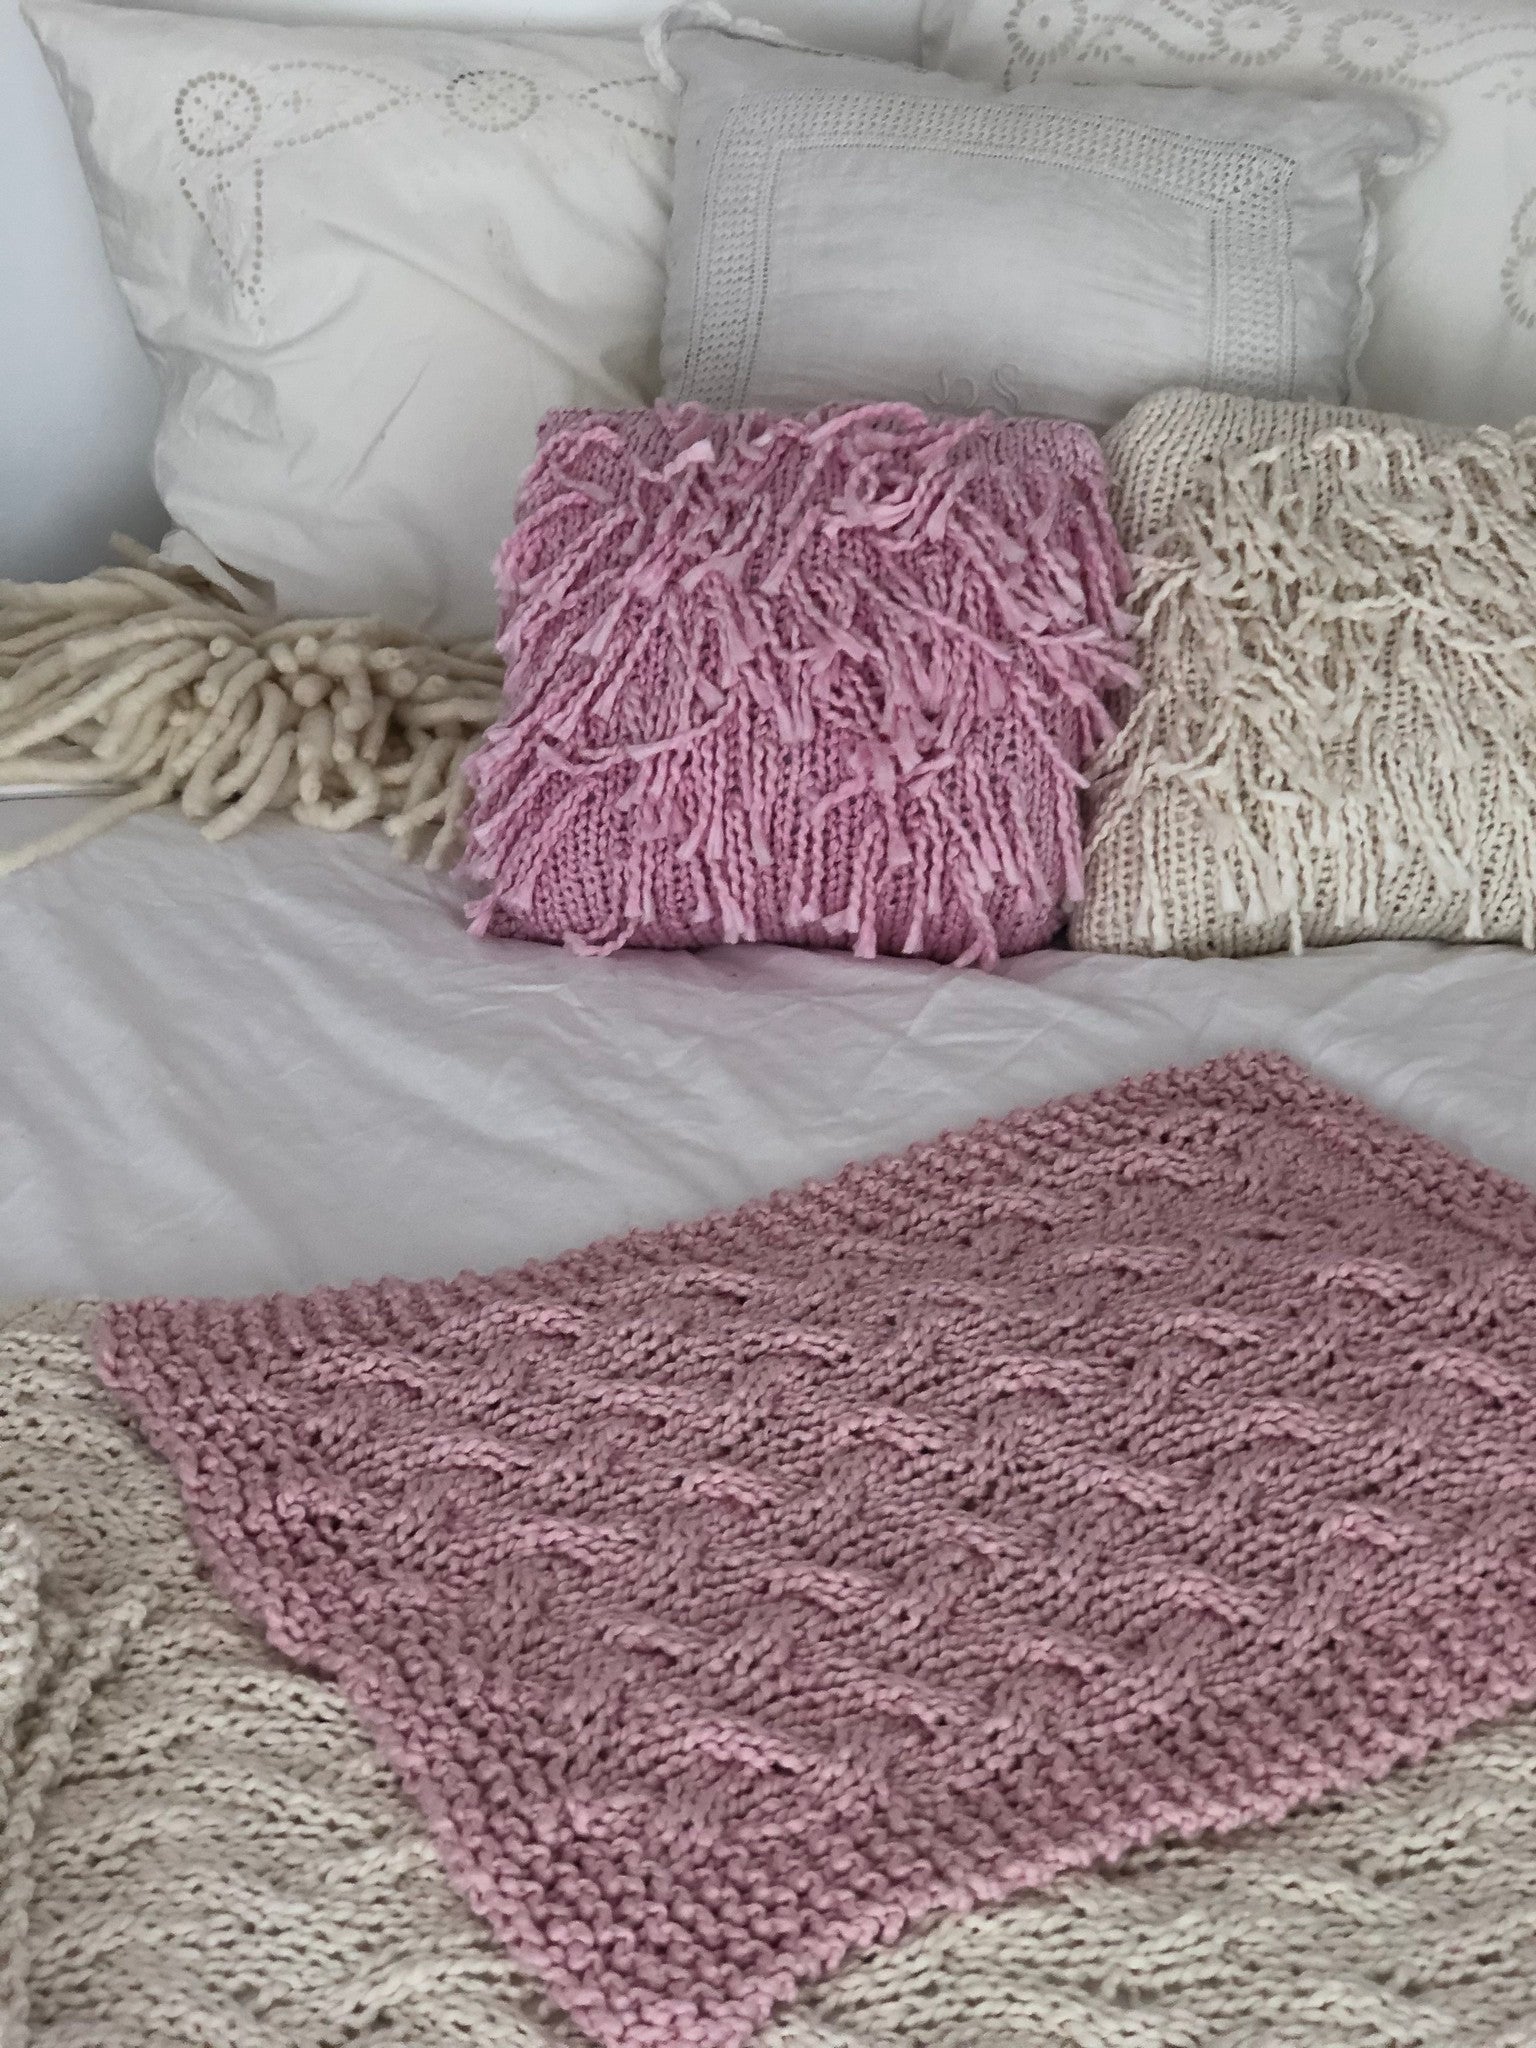 Pin Loom Temperature Blanket 1 Month Update – Rya Knot